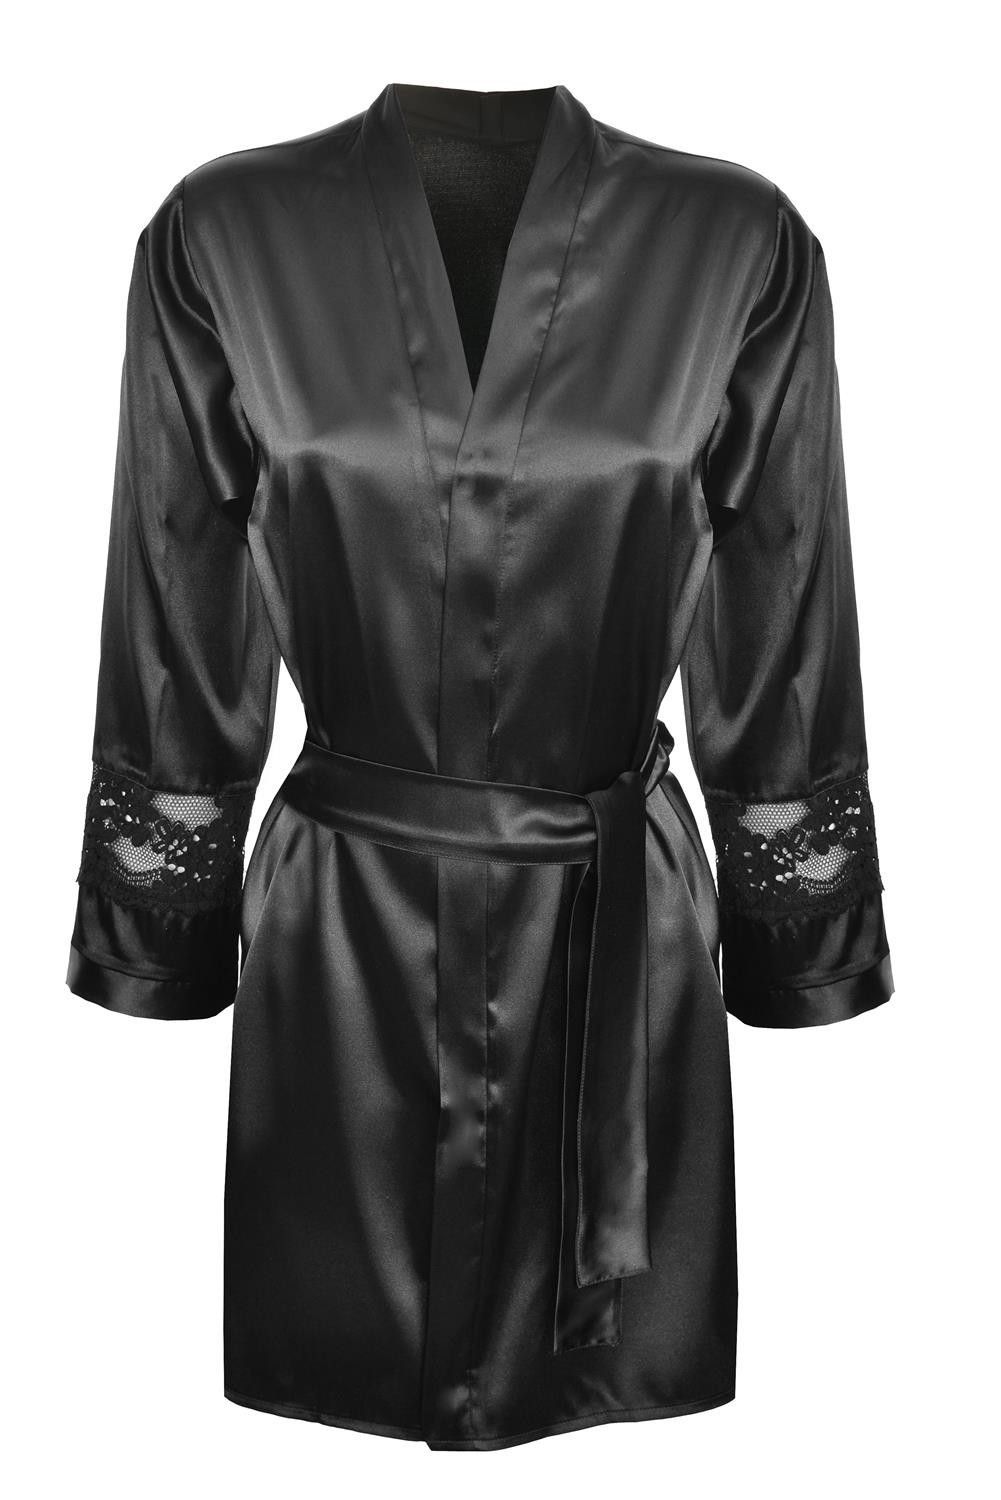 DKaren Housecoat Betty Black Velikost: L, Barva: černá